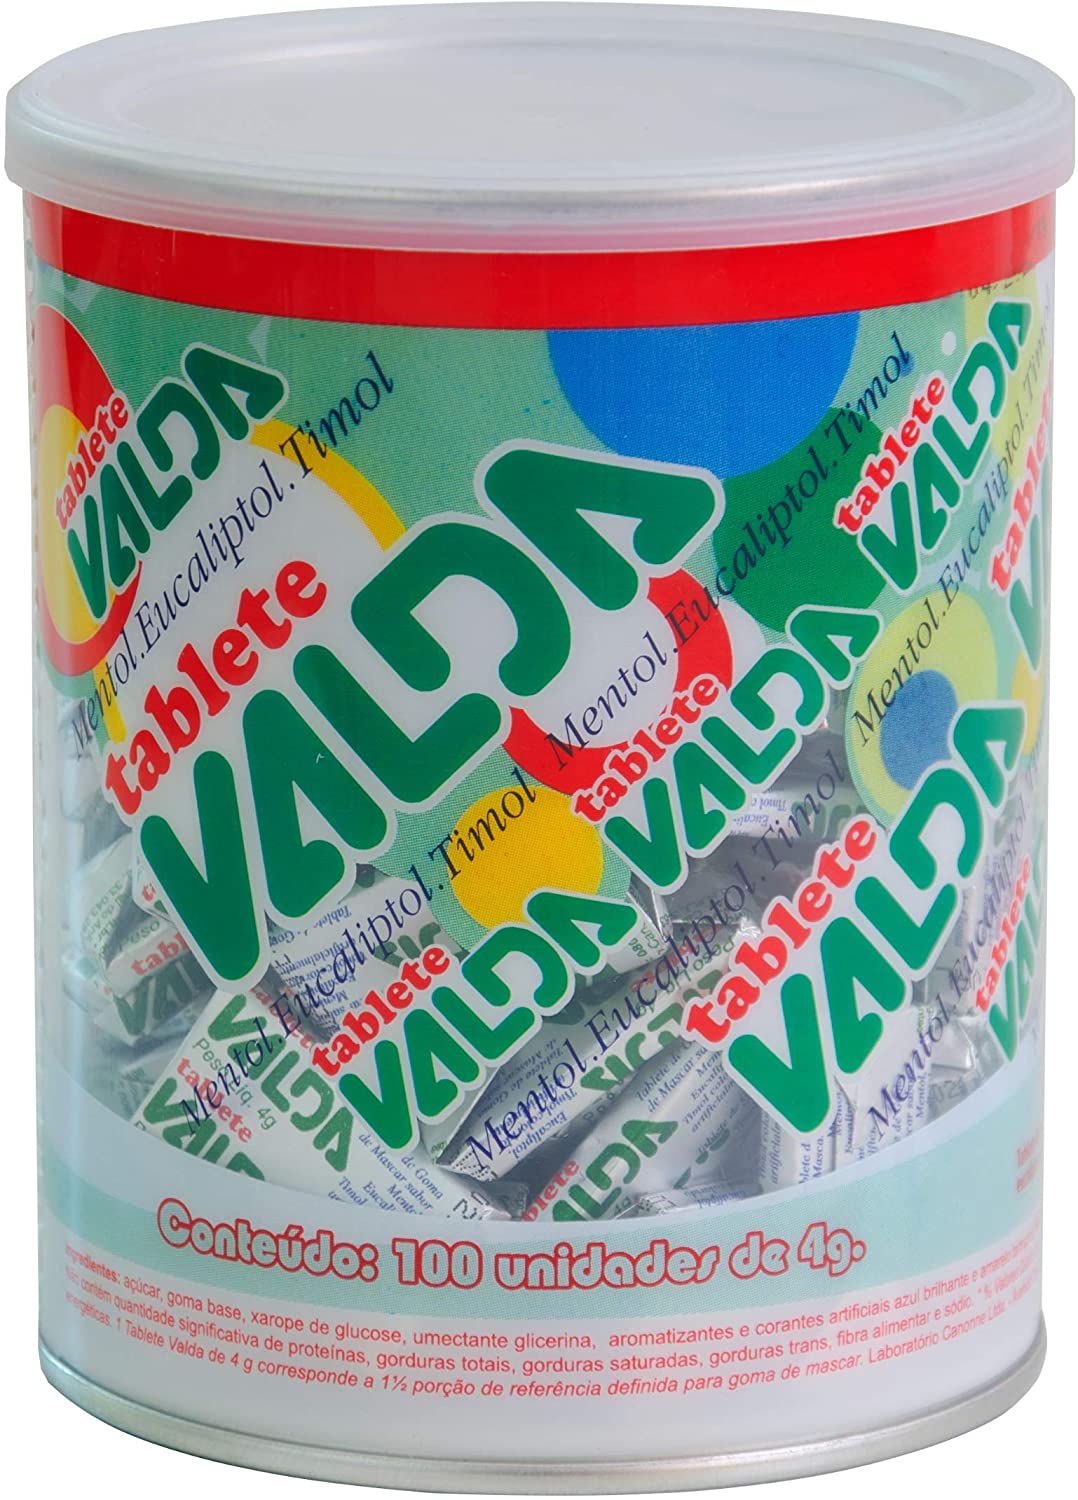 Pastilhas Valda, Kit com 100 Tablete de 4g